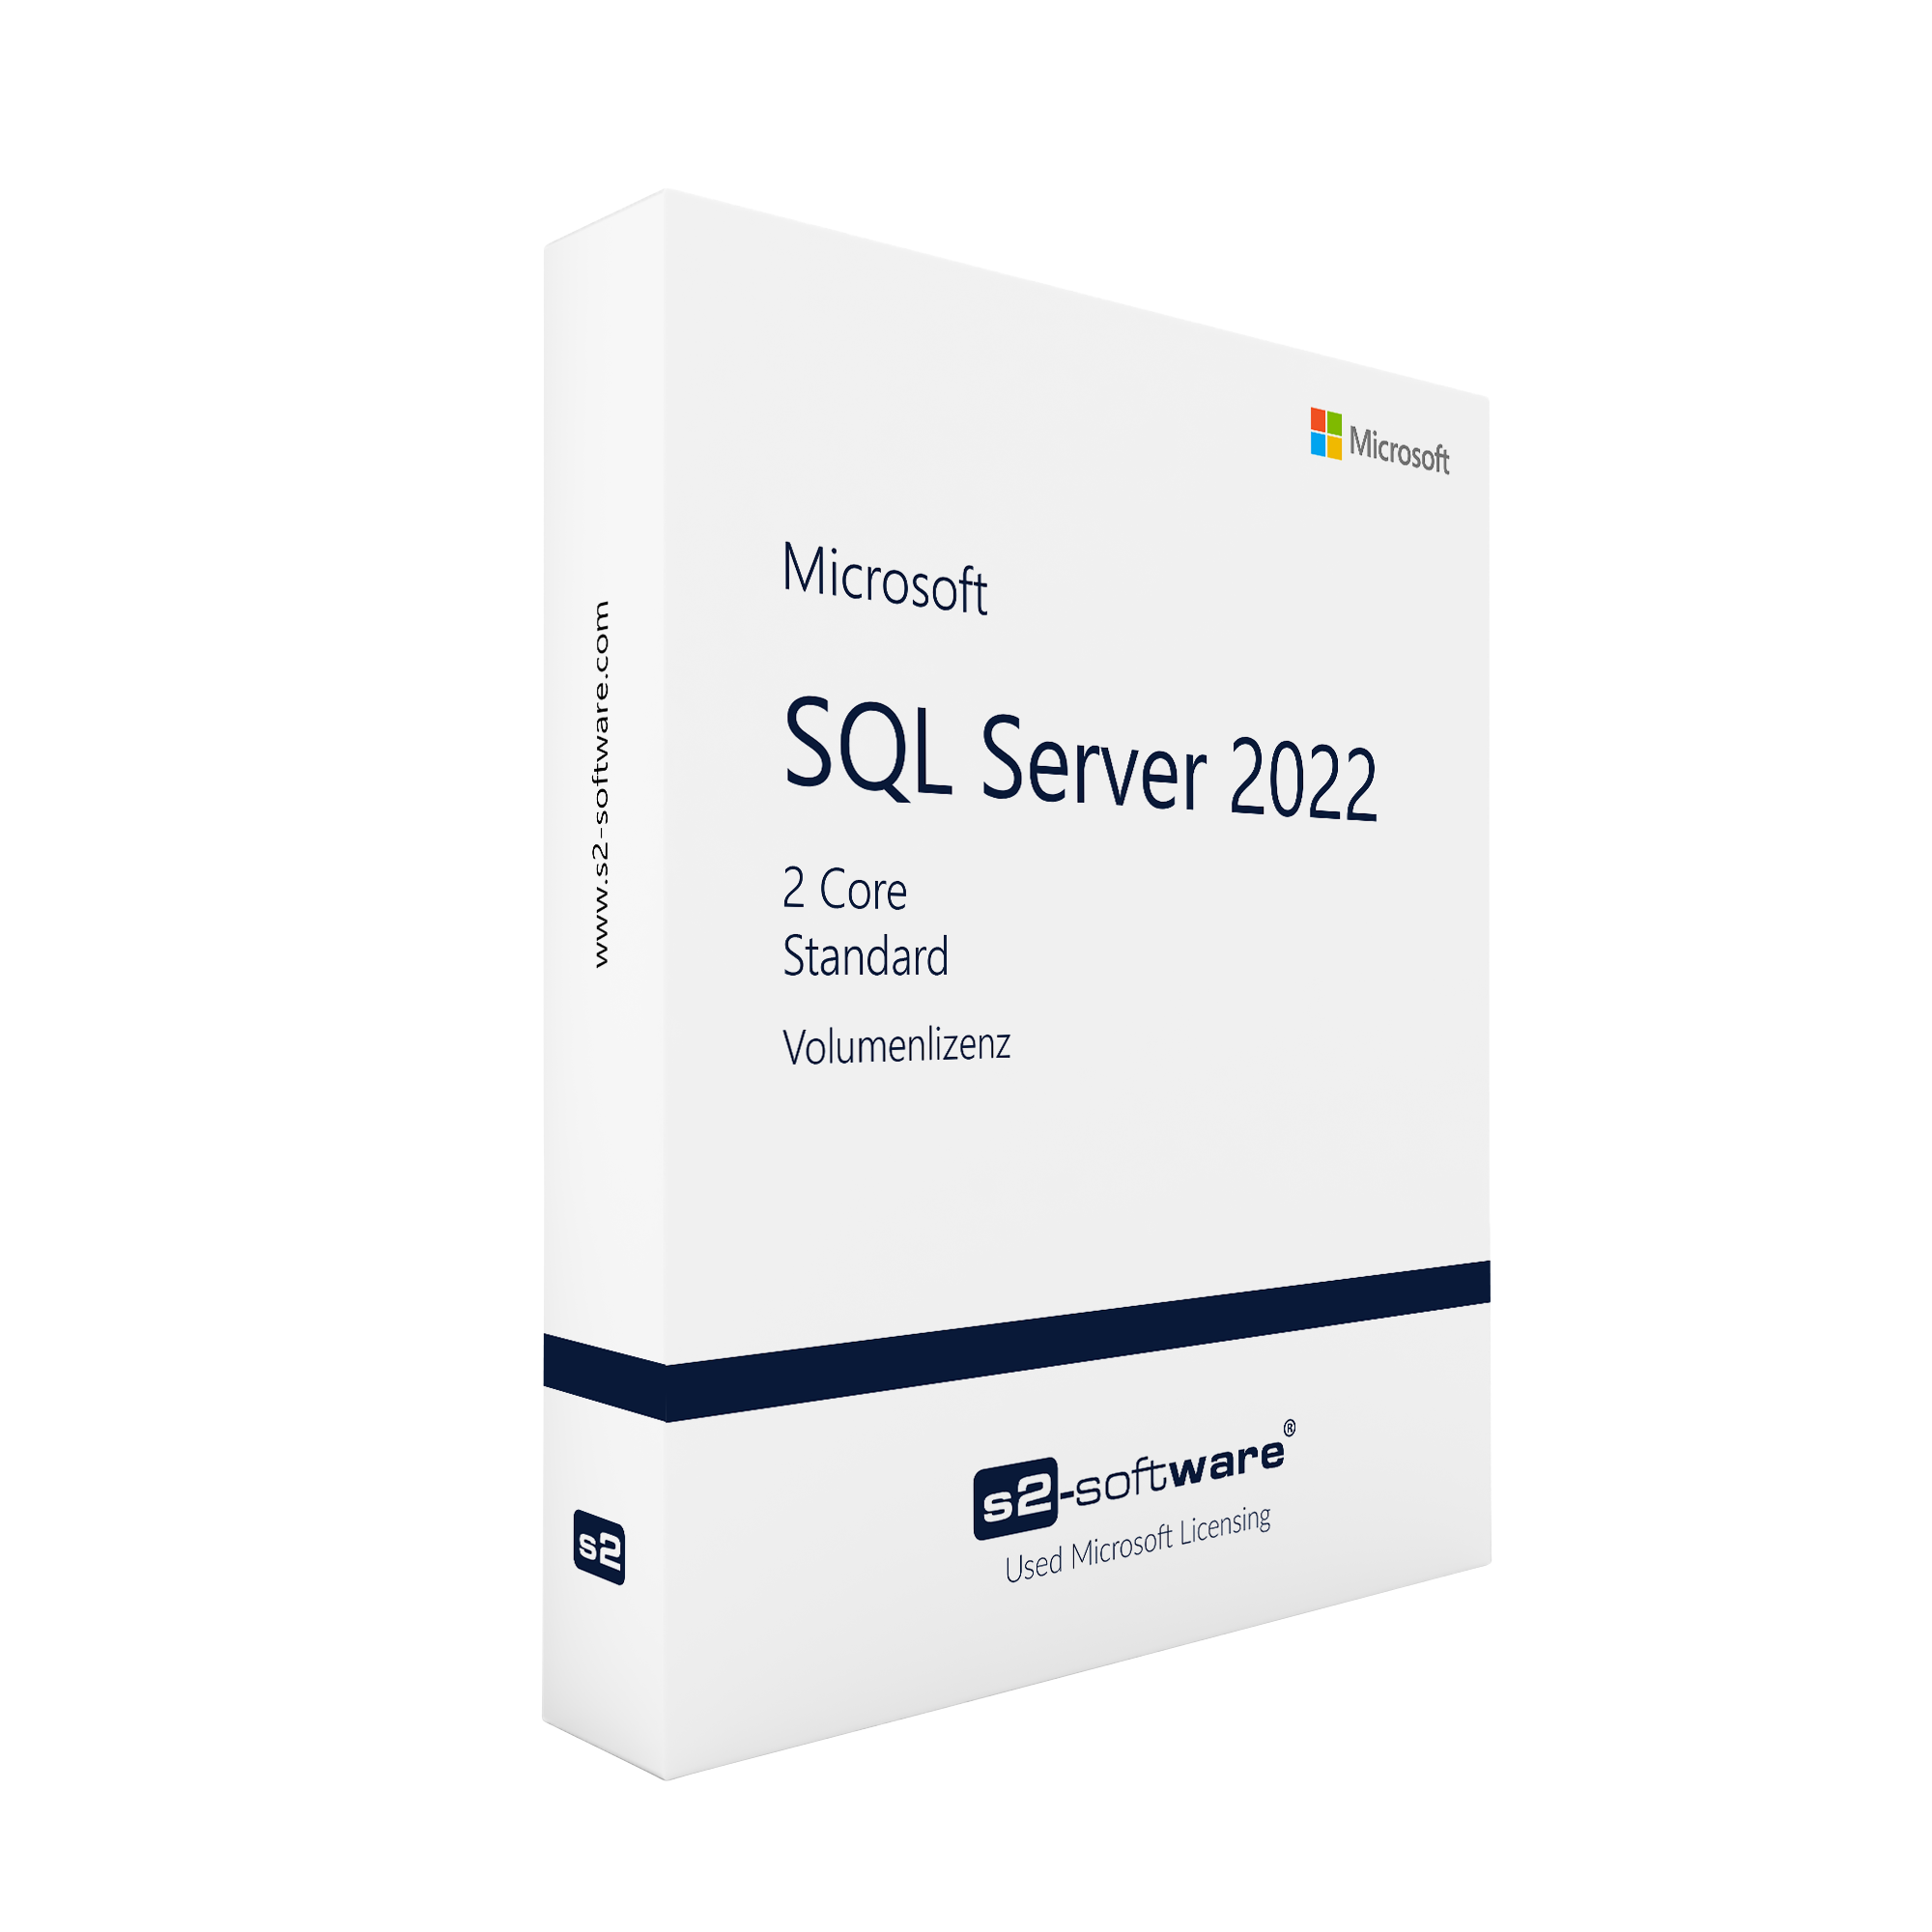 SQL Server 2022 Standard 2 core